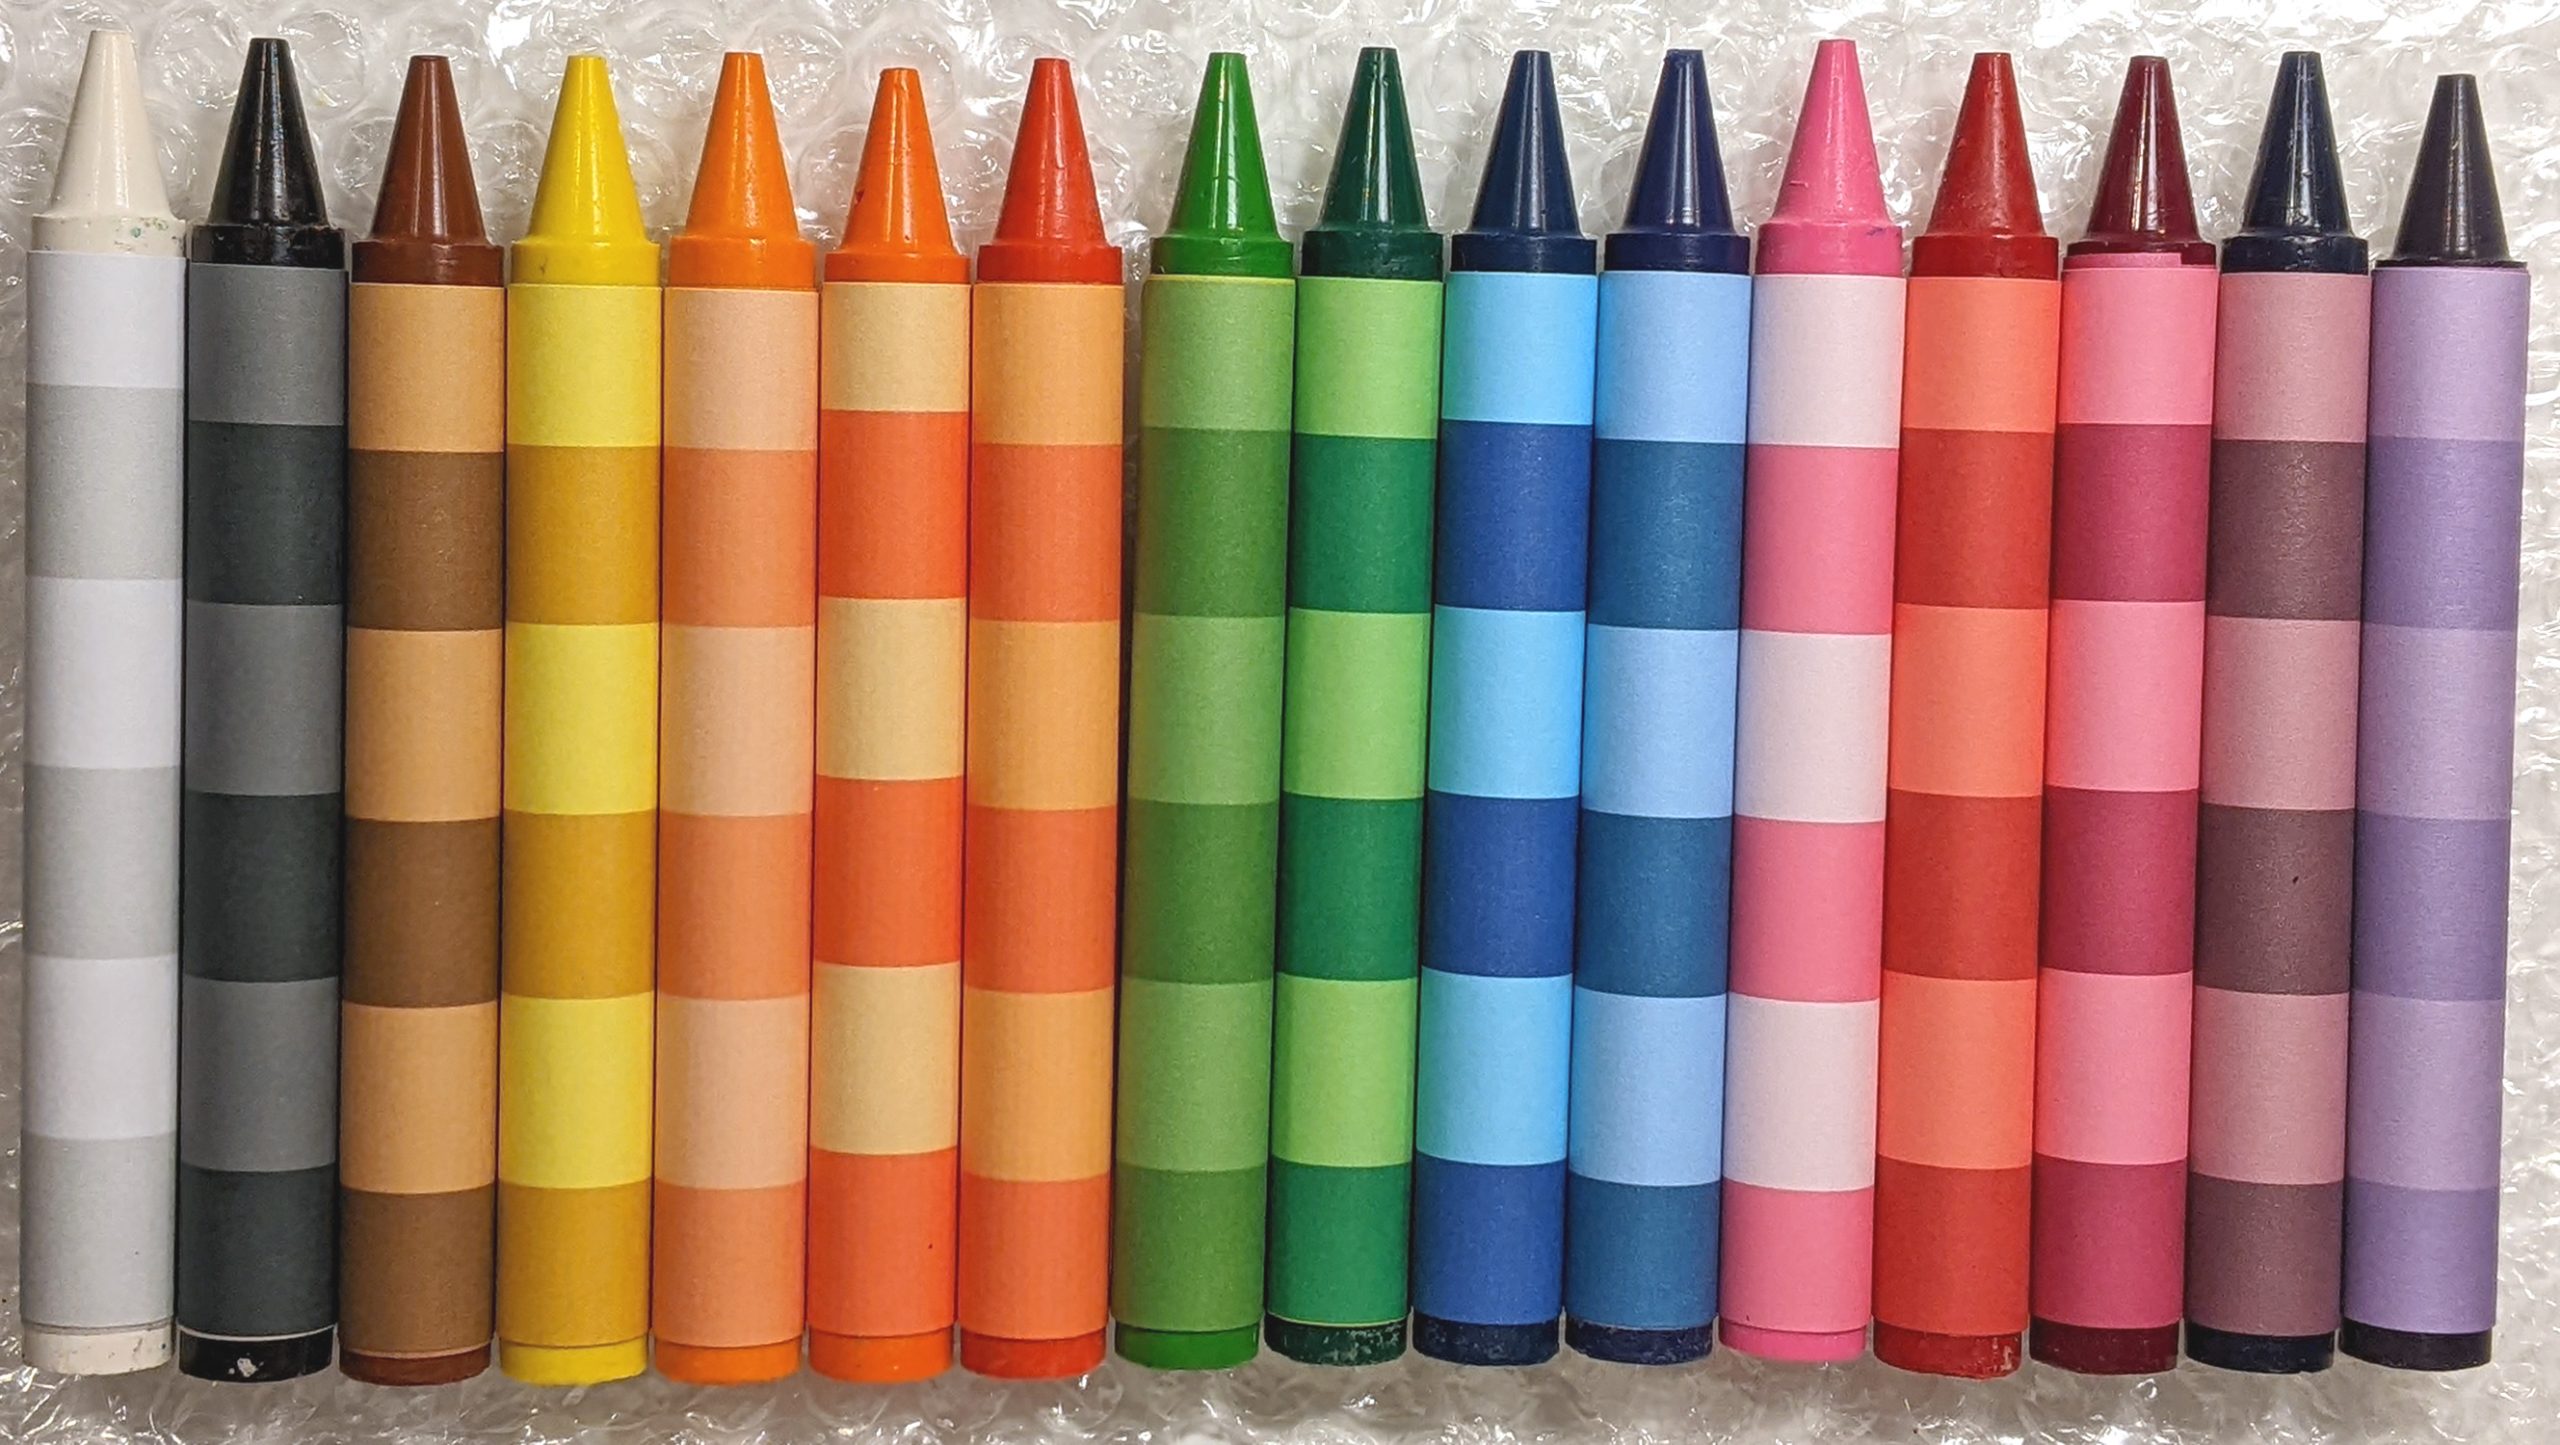 Green Striped Jumbo Crayons (set of 4)